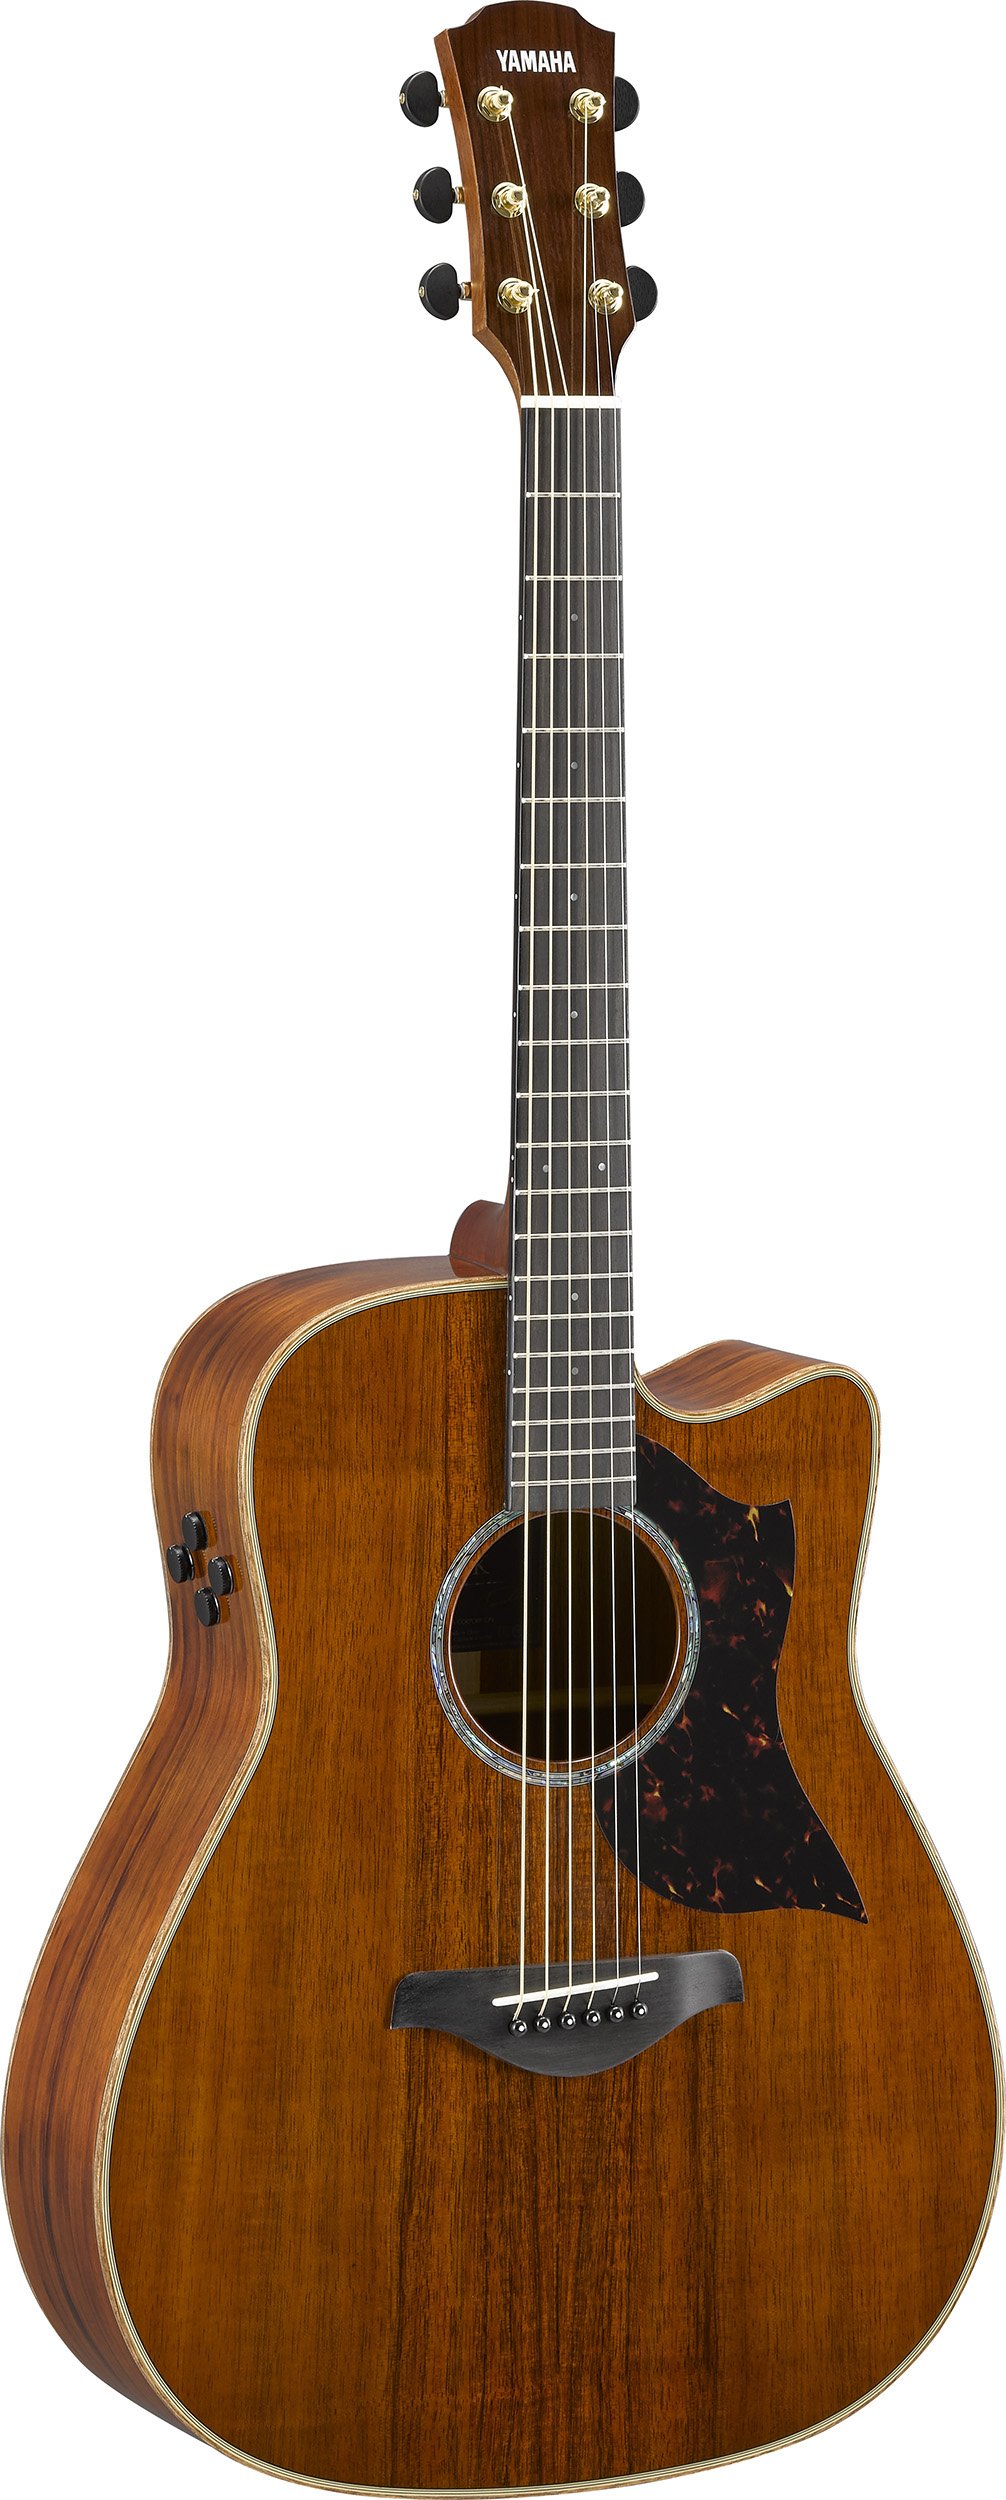 egmond acoustic guitar 108sb